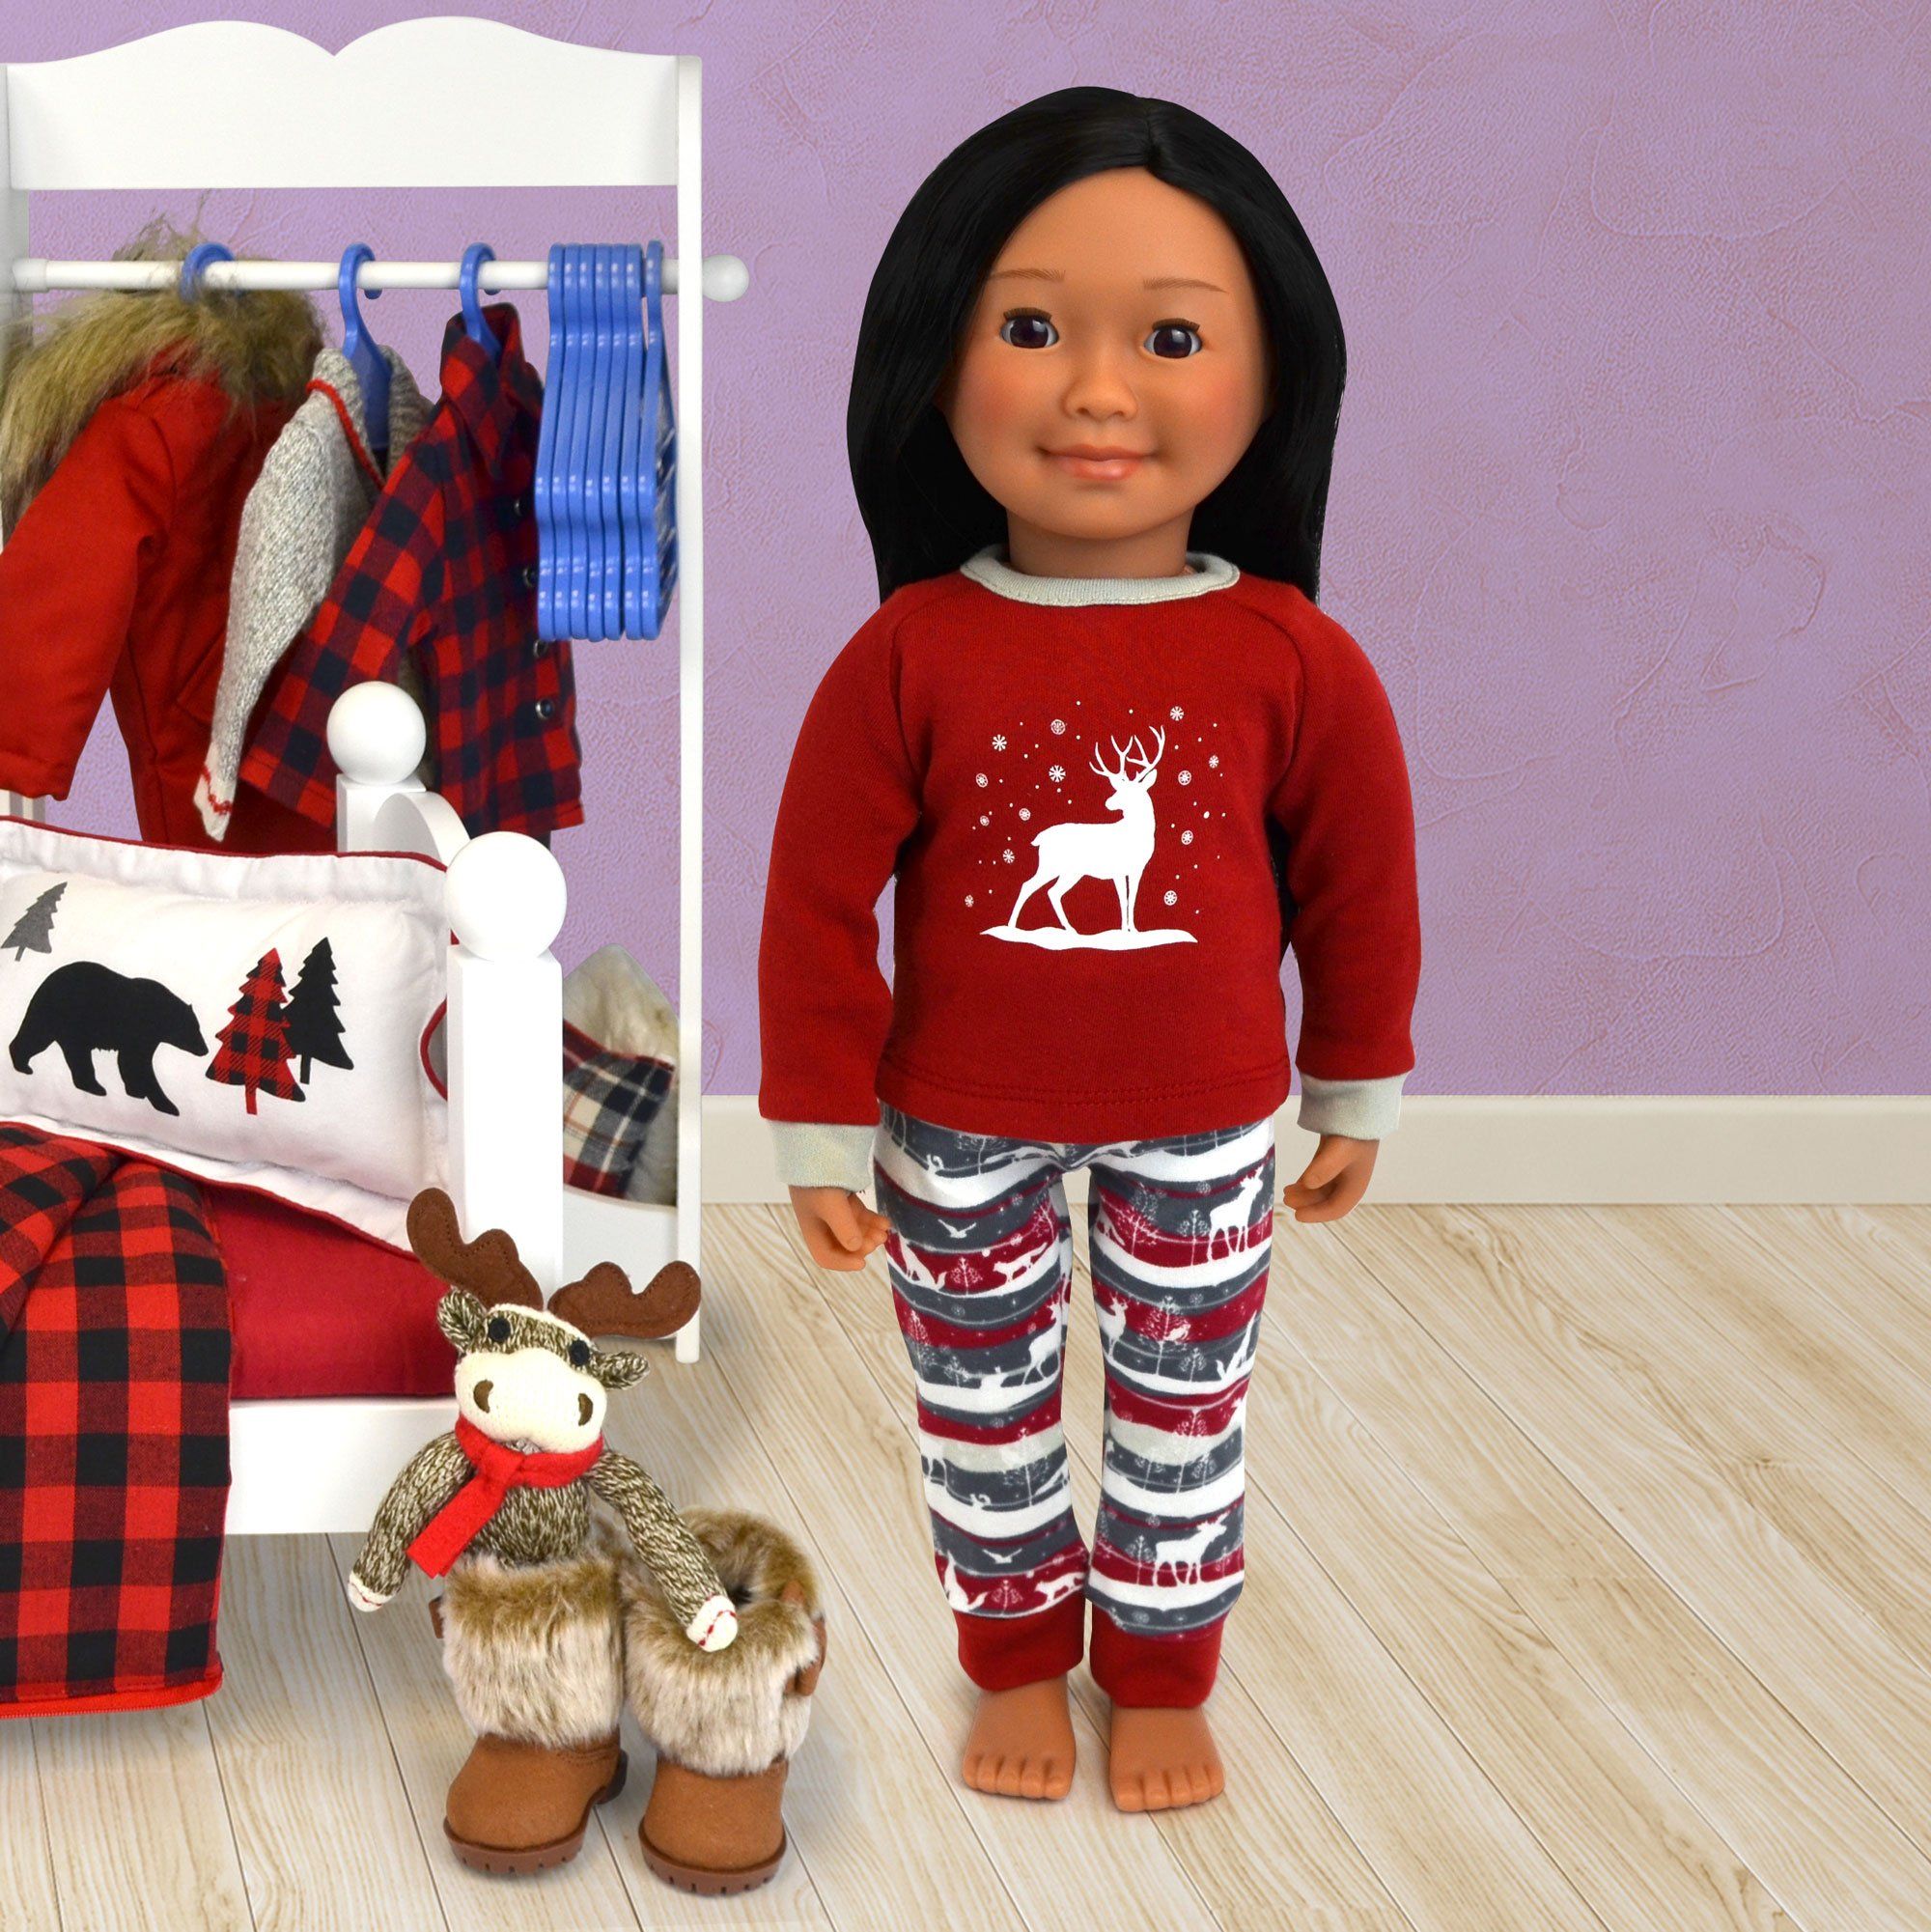 Woodland Winter Pattern Kids 2-Piece Pajama Set 